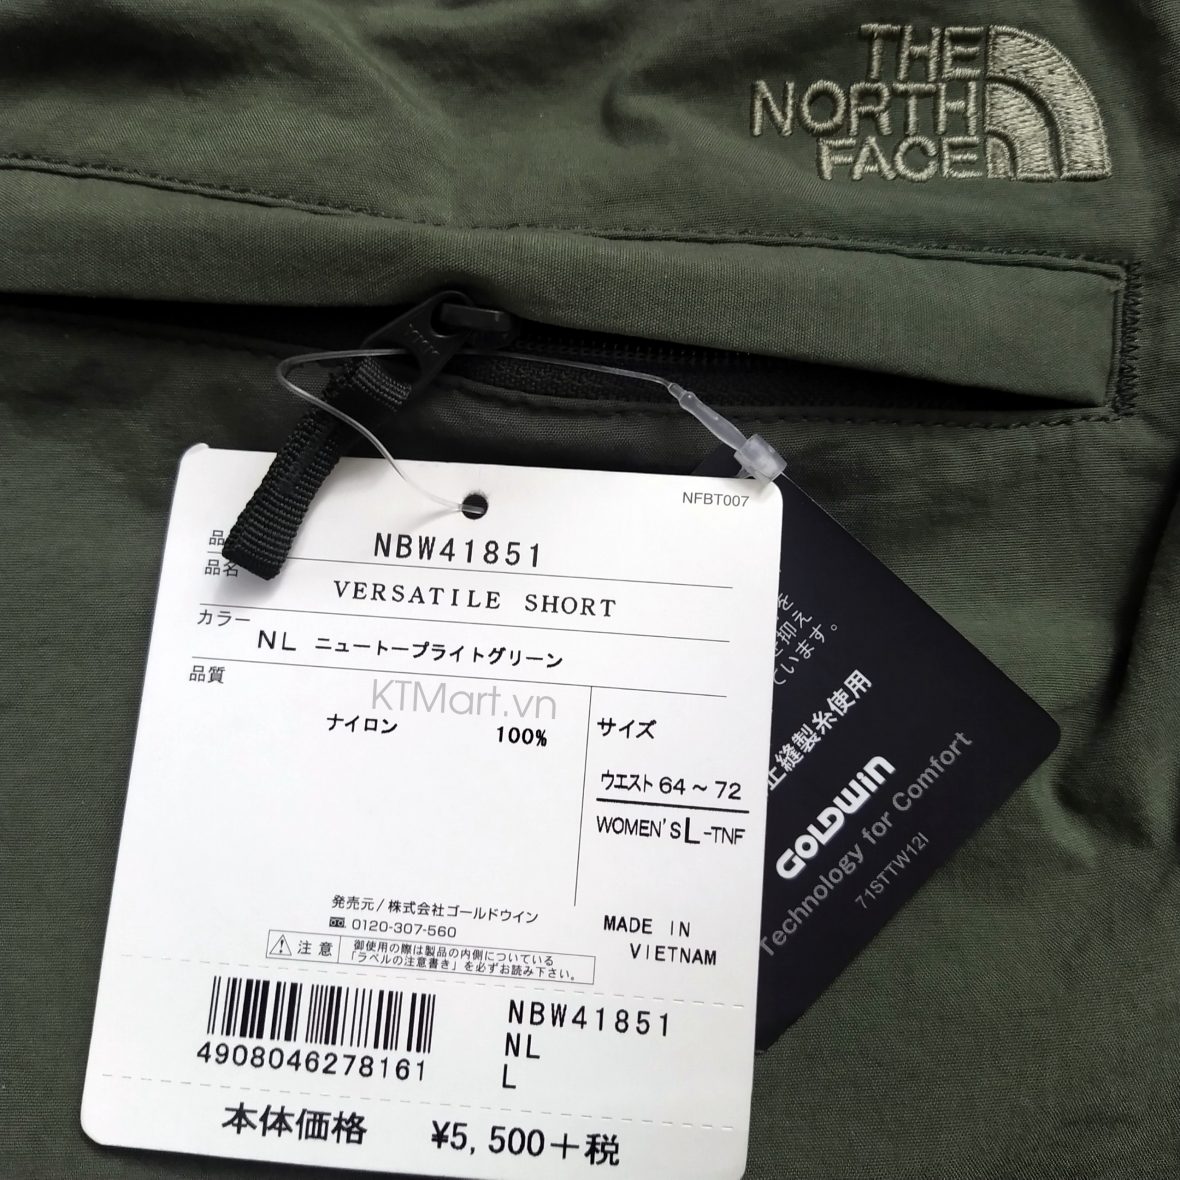 The North Face Women’s Versatile Shorts NBW41851 ktmart 7